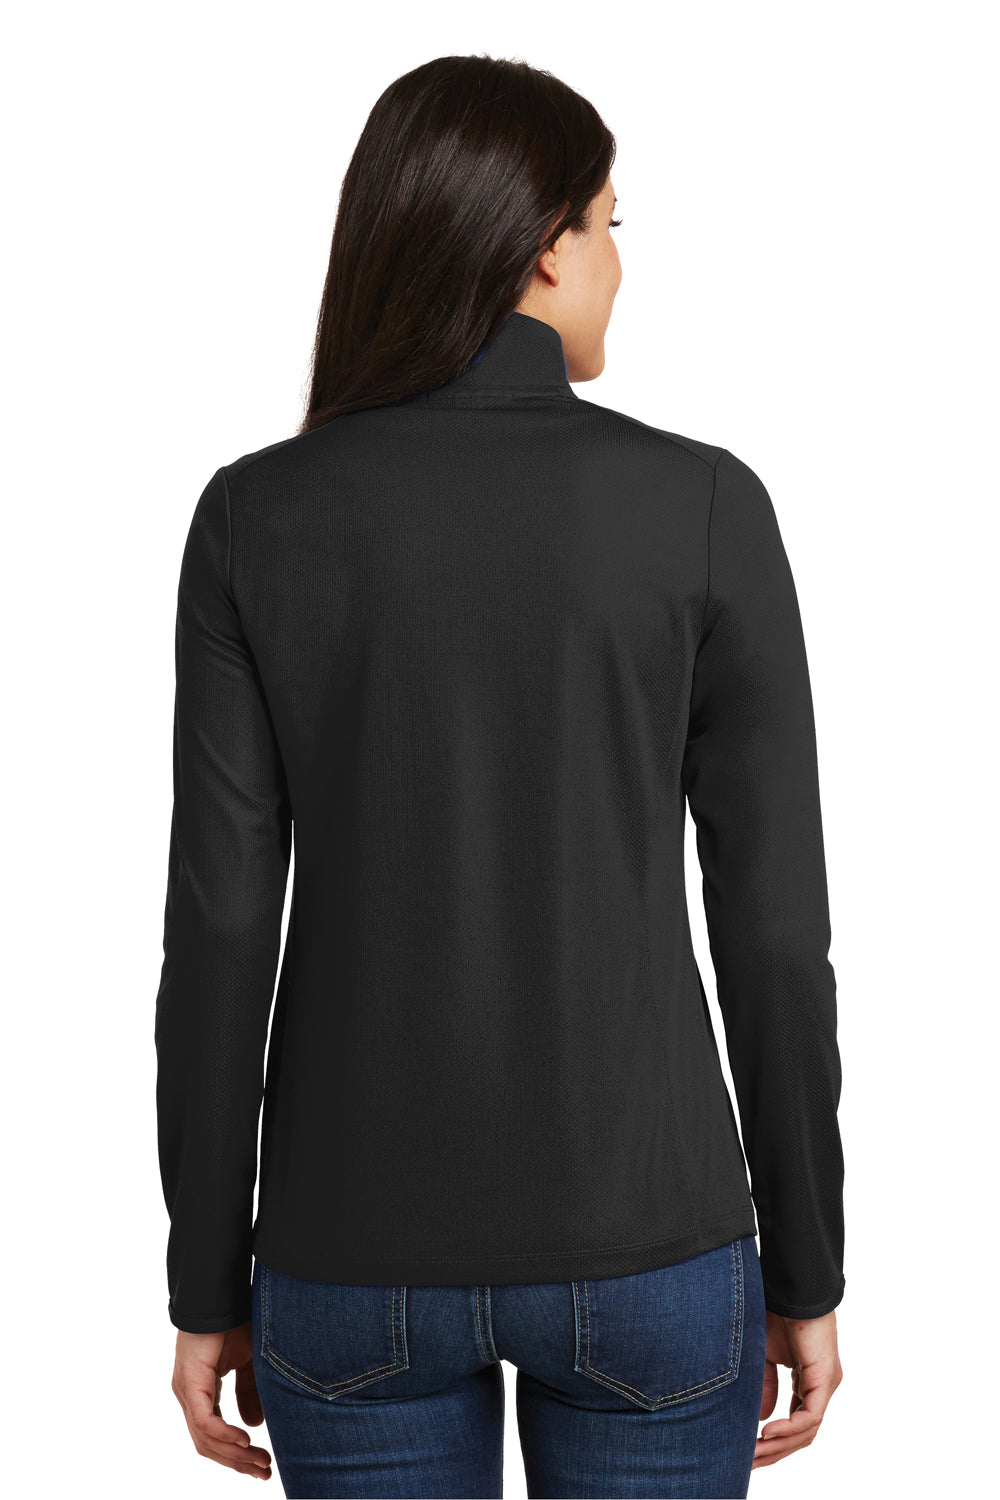 Port Authority L806 Womens Moisture Wicking 1/4 Zip Sweatshirt Black Back